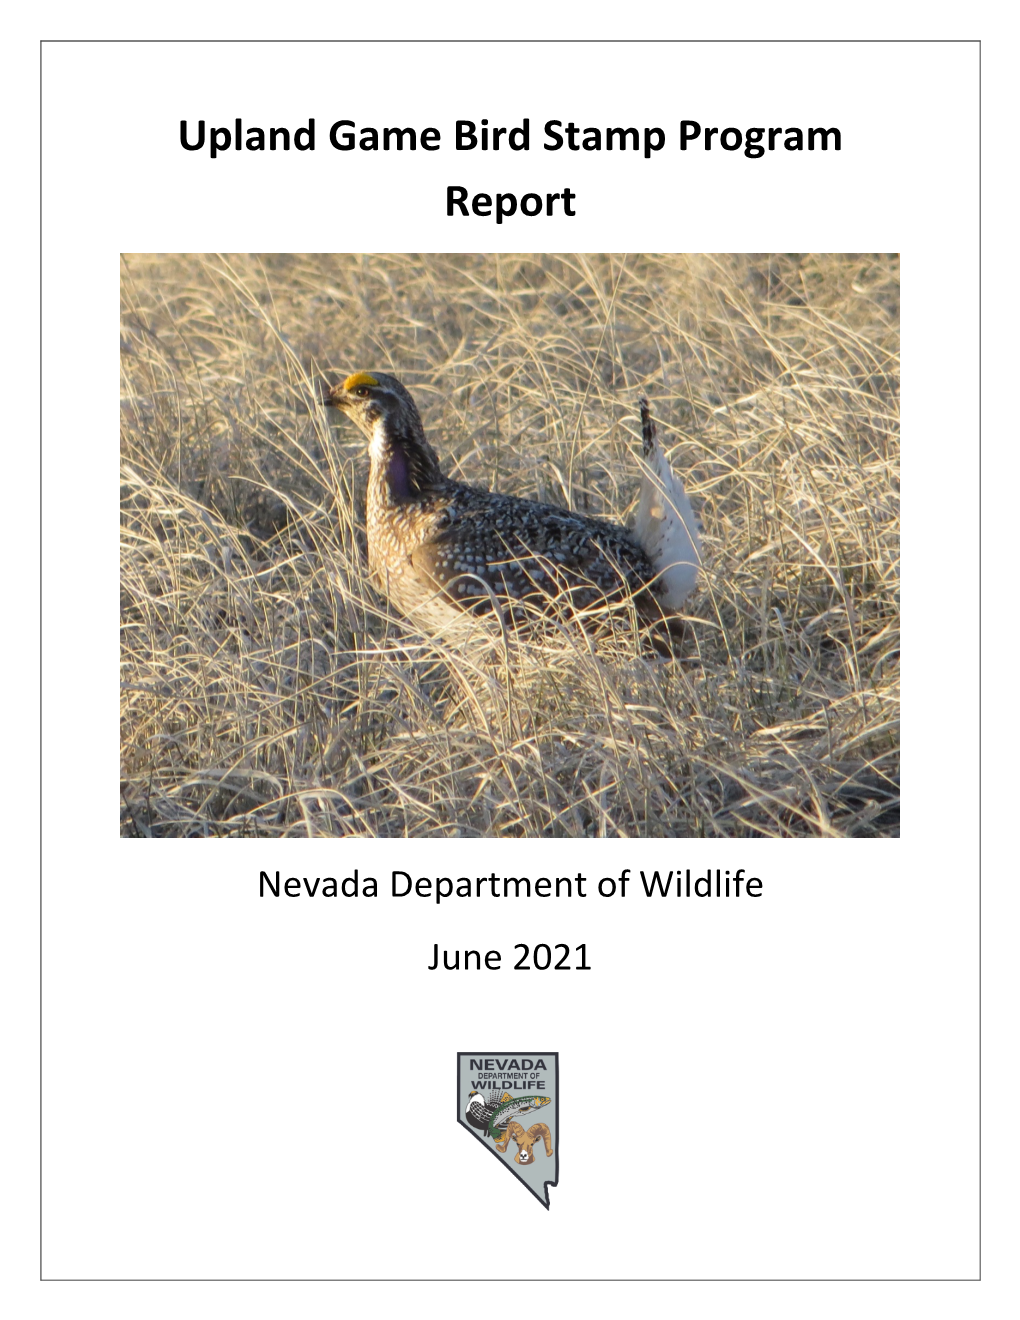 Upland Game Bird Stamp Program Report